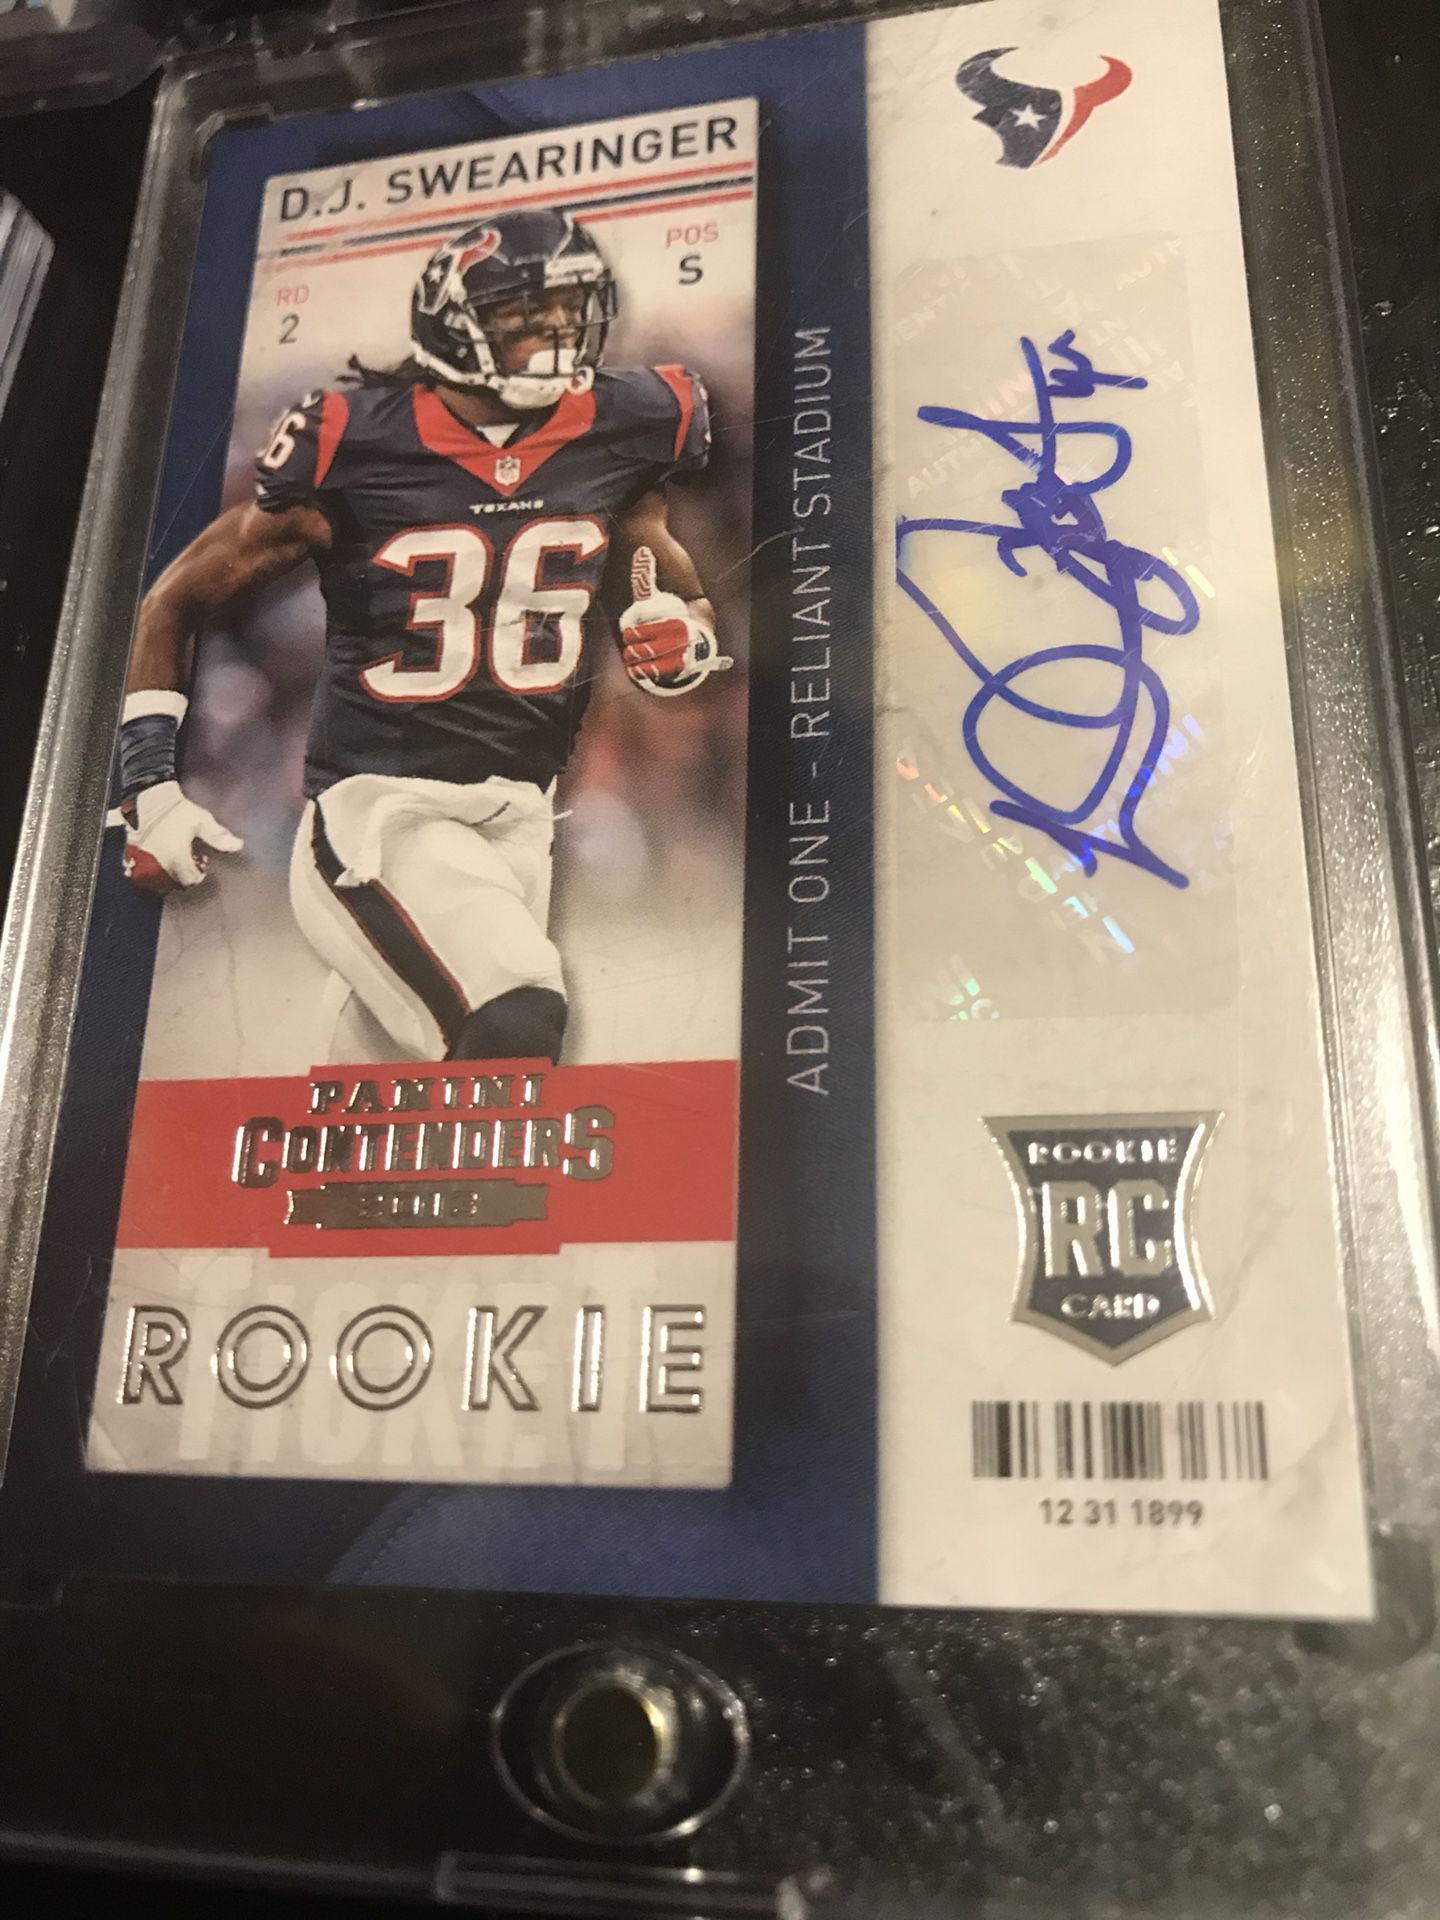 NFL rookie card